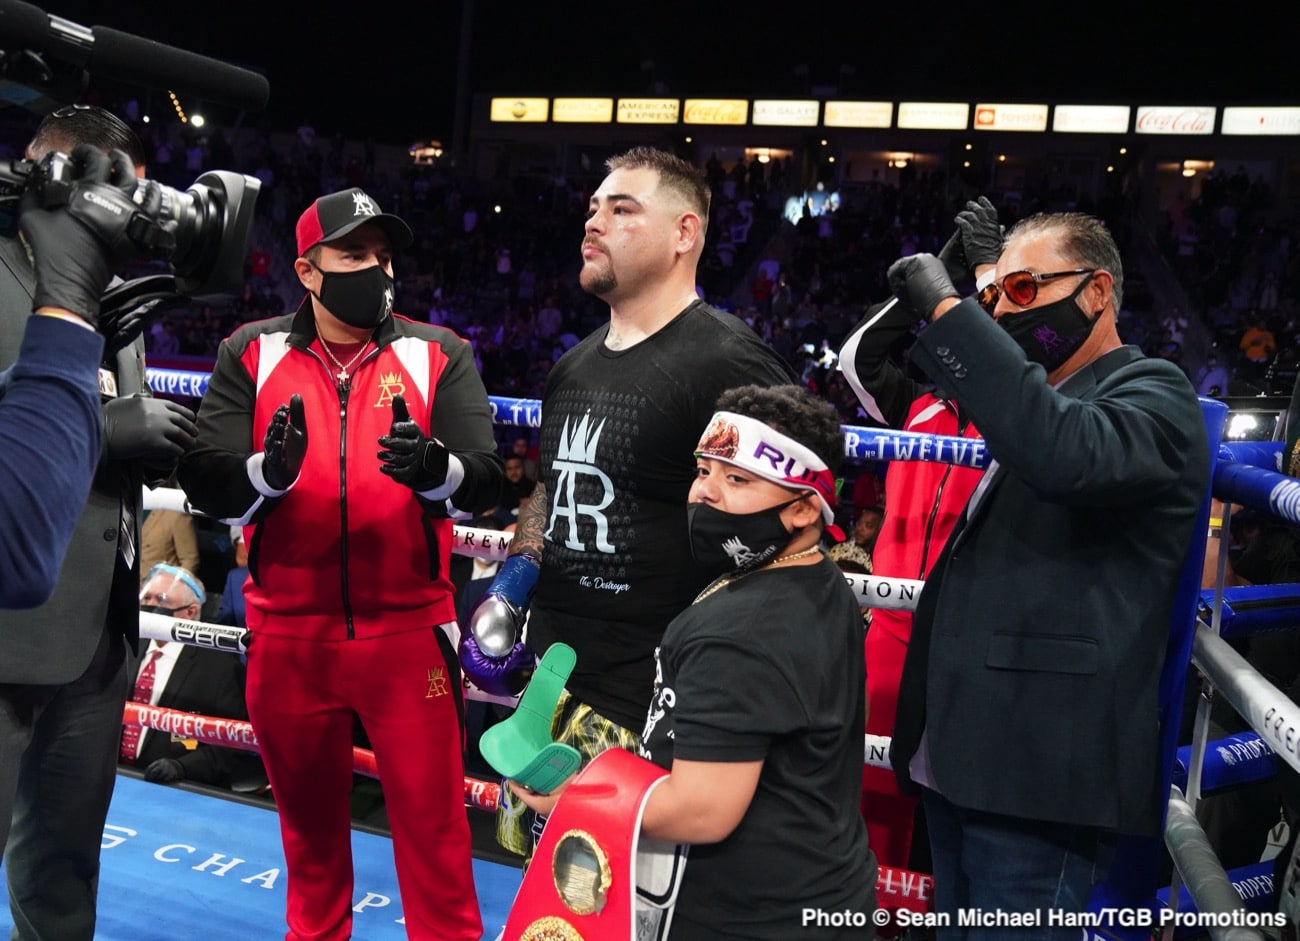 Andy Ruiz Jr., Tyson Fury boxing photo